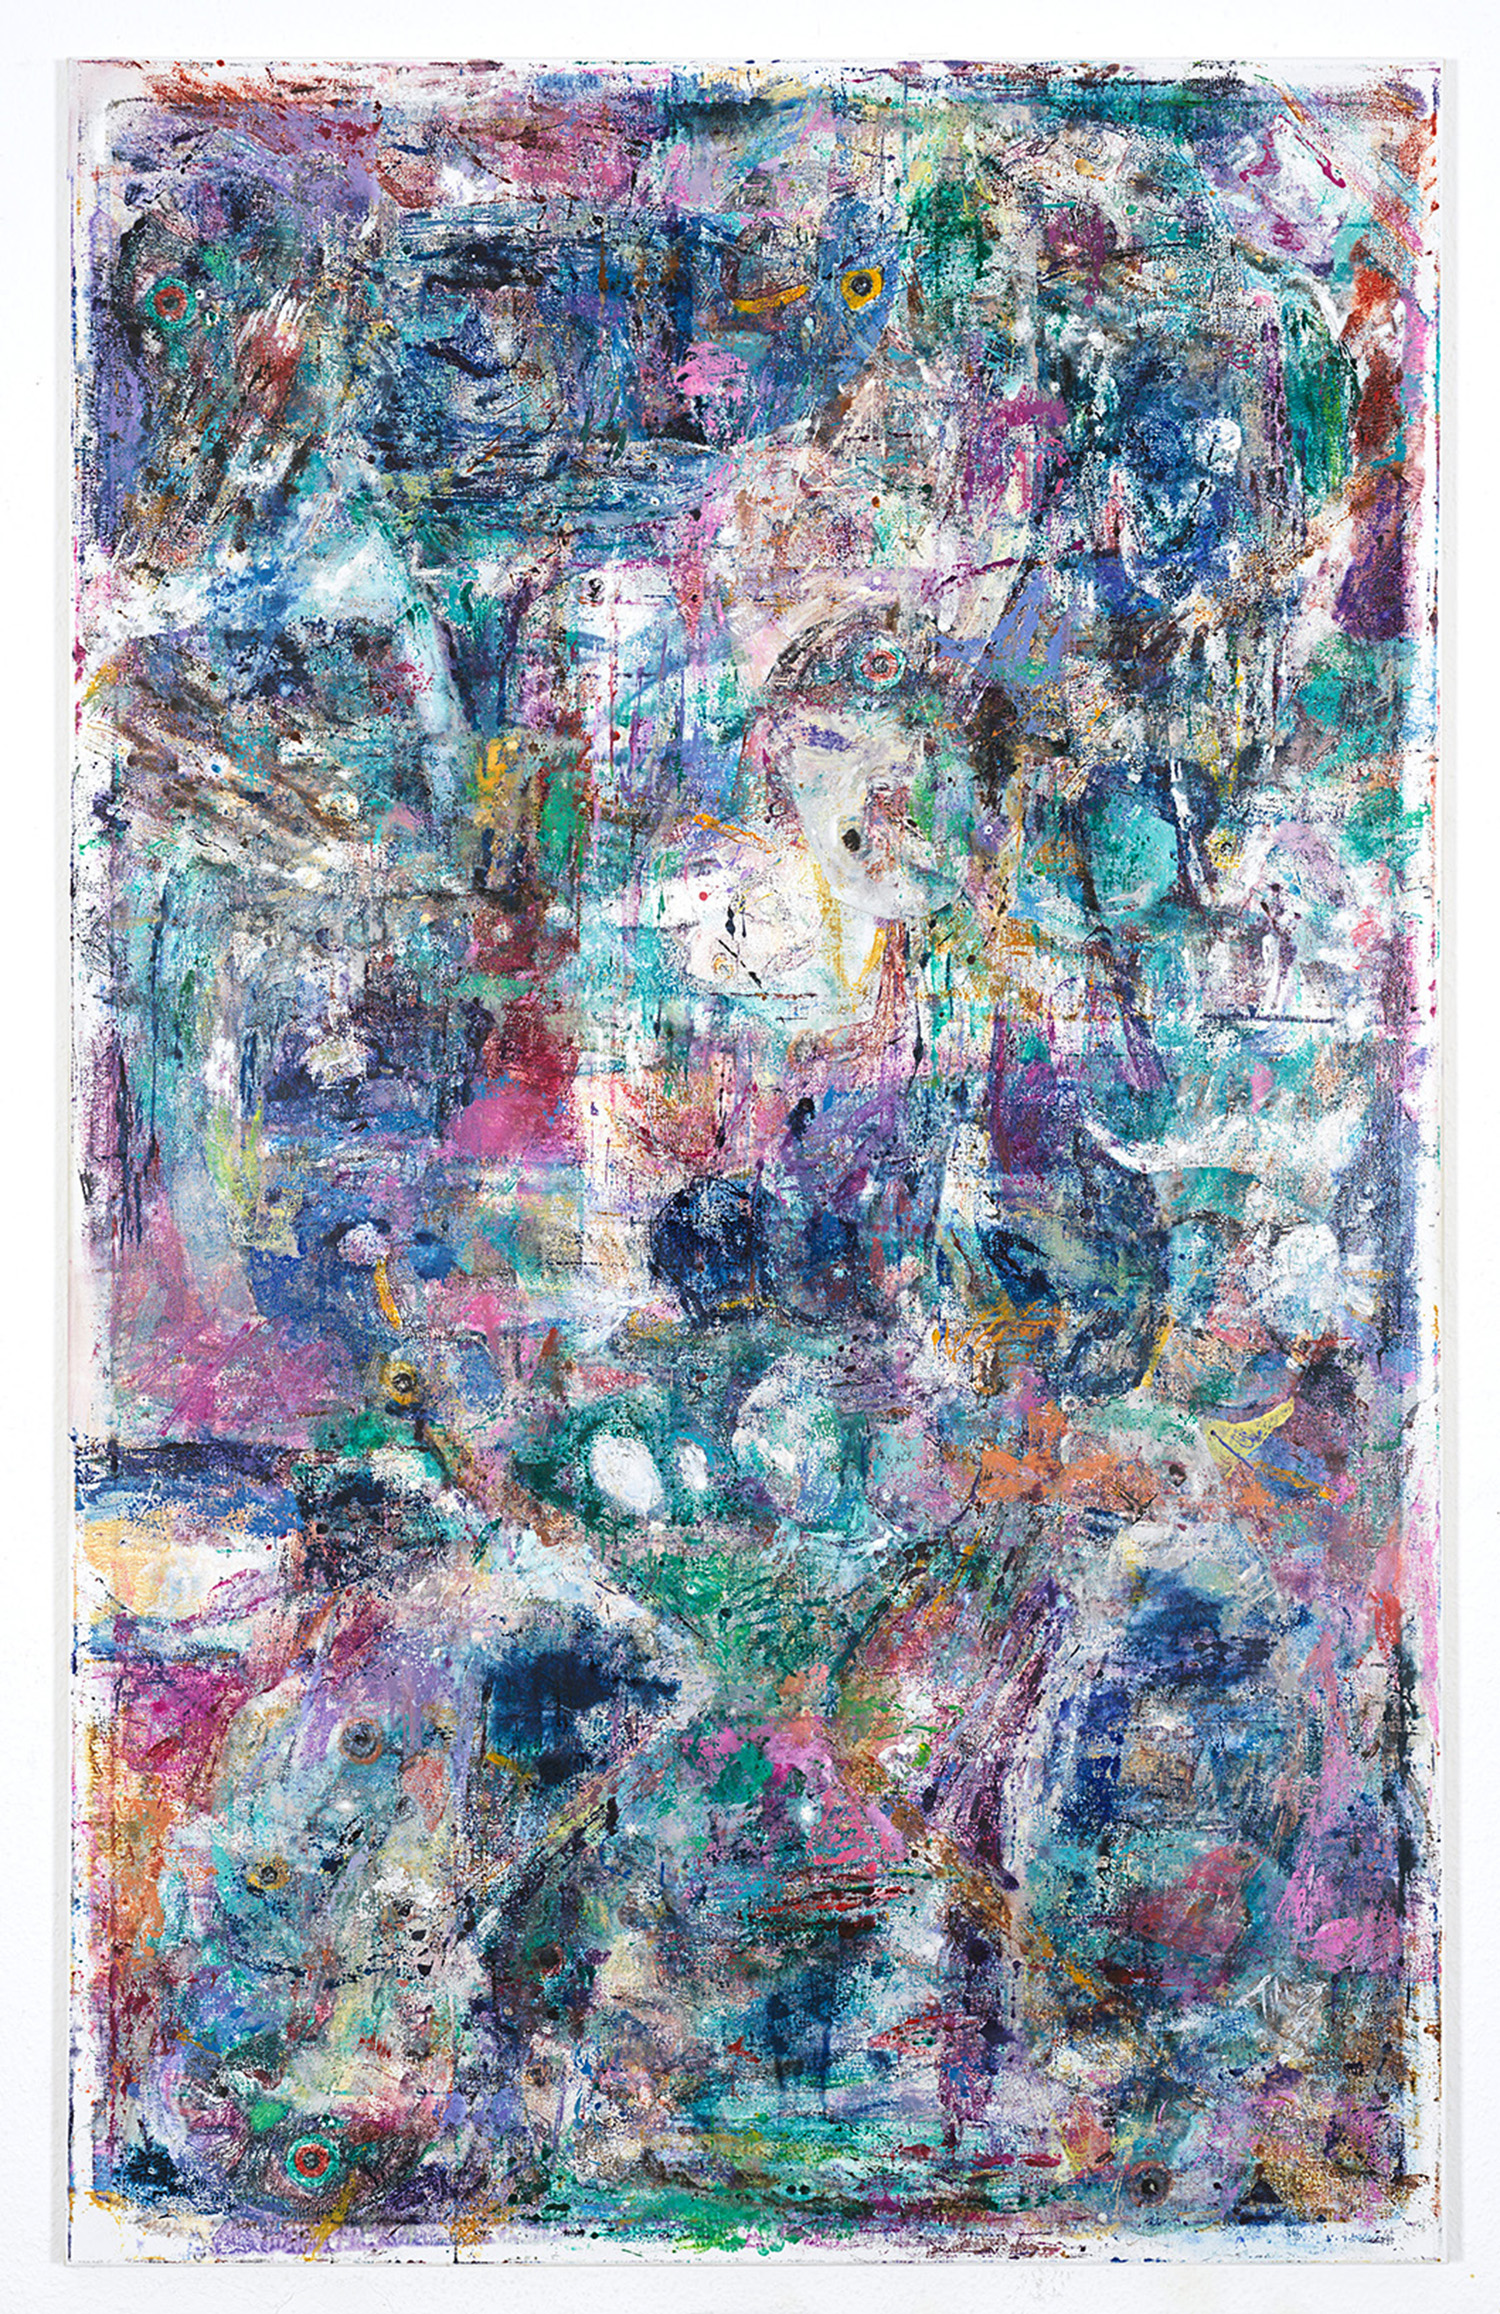  Pierres, 2018  200 x 125 cm. oil on canvas 